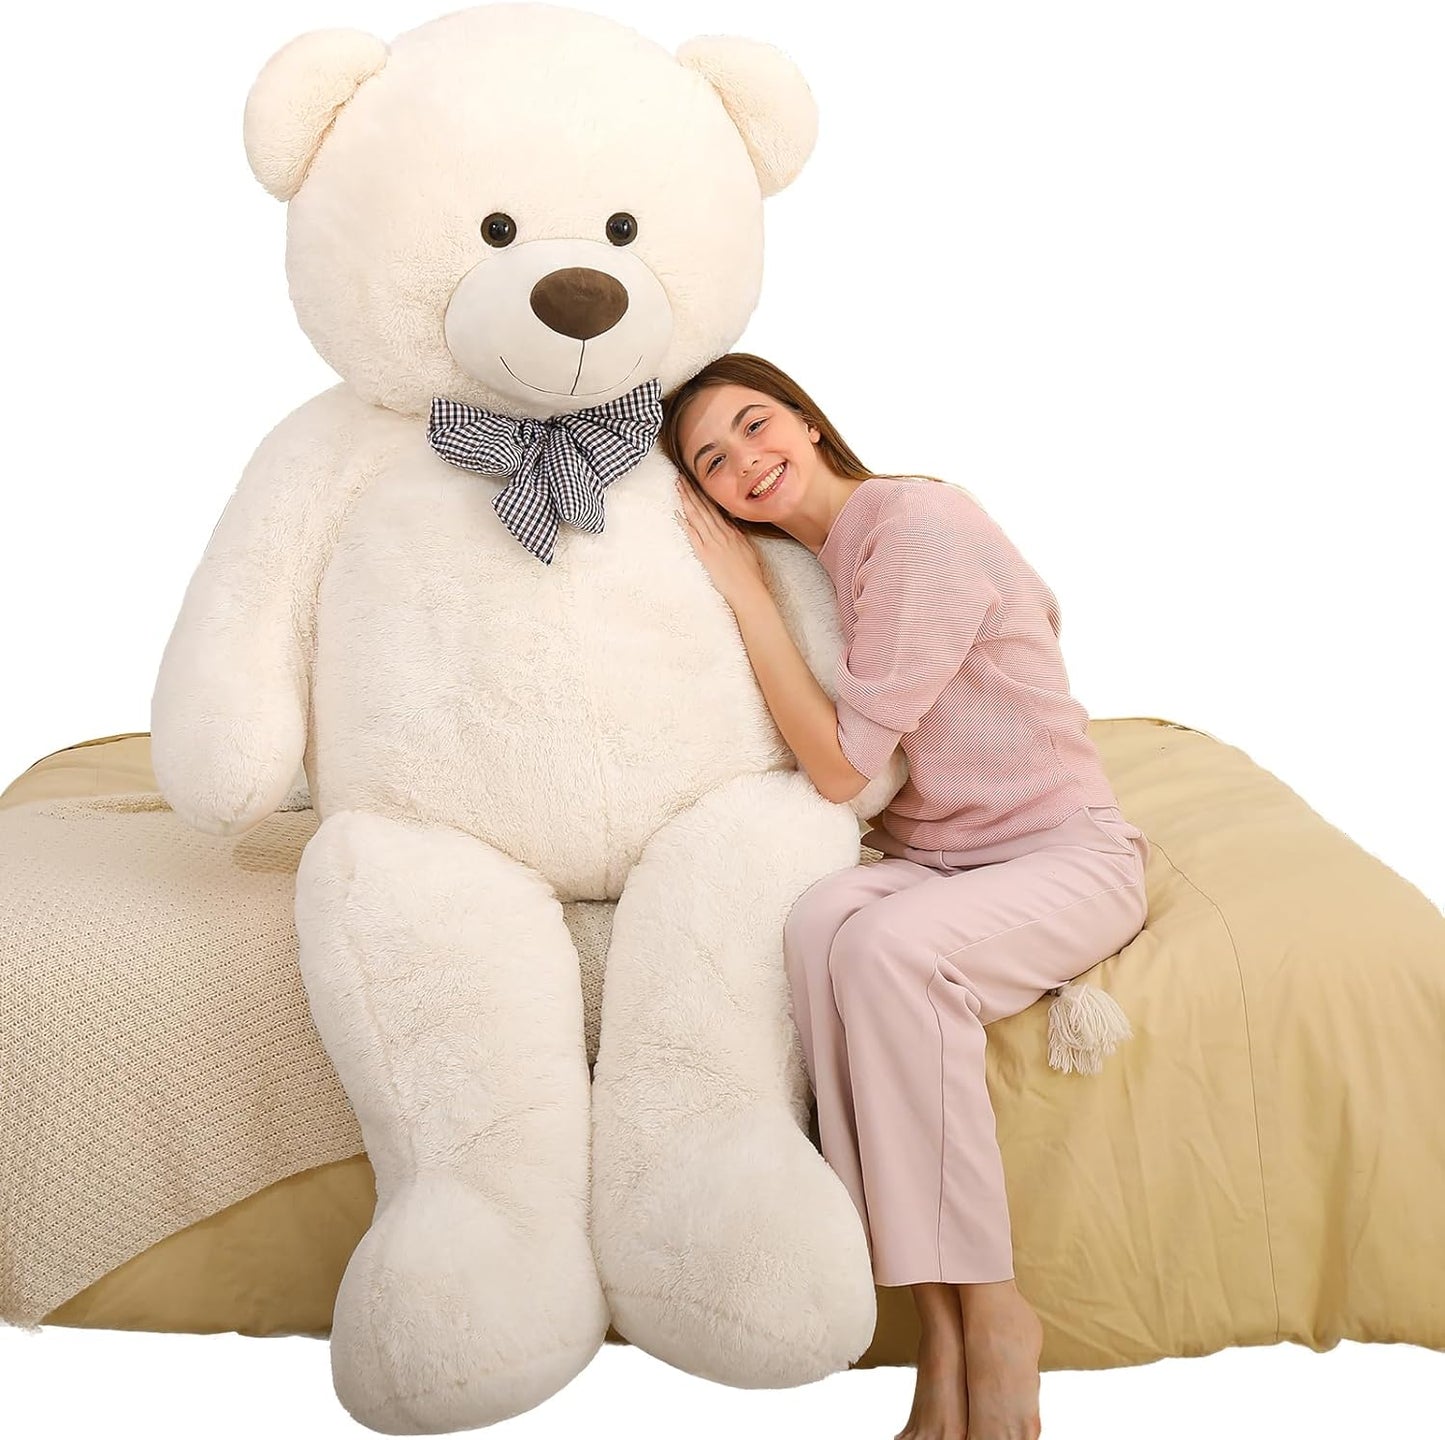 Life Size Teddy Bear Plush Toy, Beige, 6 FT - MorisMos Stuffed Animals